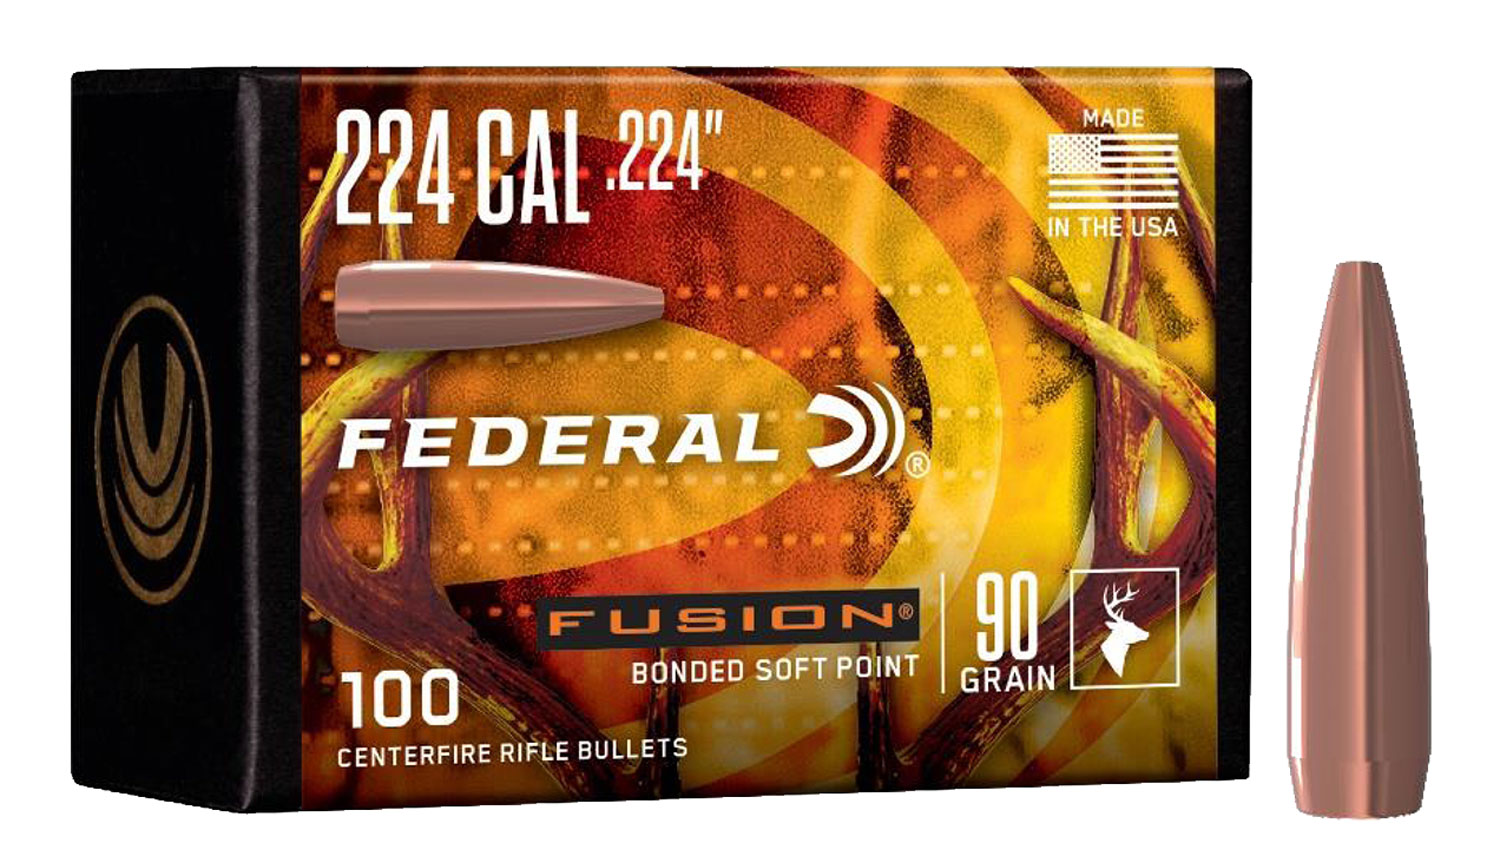 Federal FB224F1 Fusion Component  224 Cal .224 90 gr Bonded Soft Point 100 Per Box